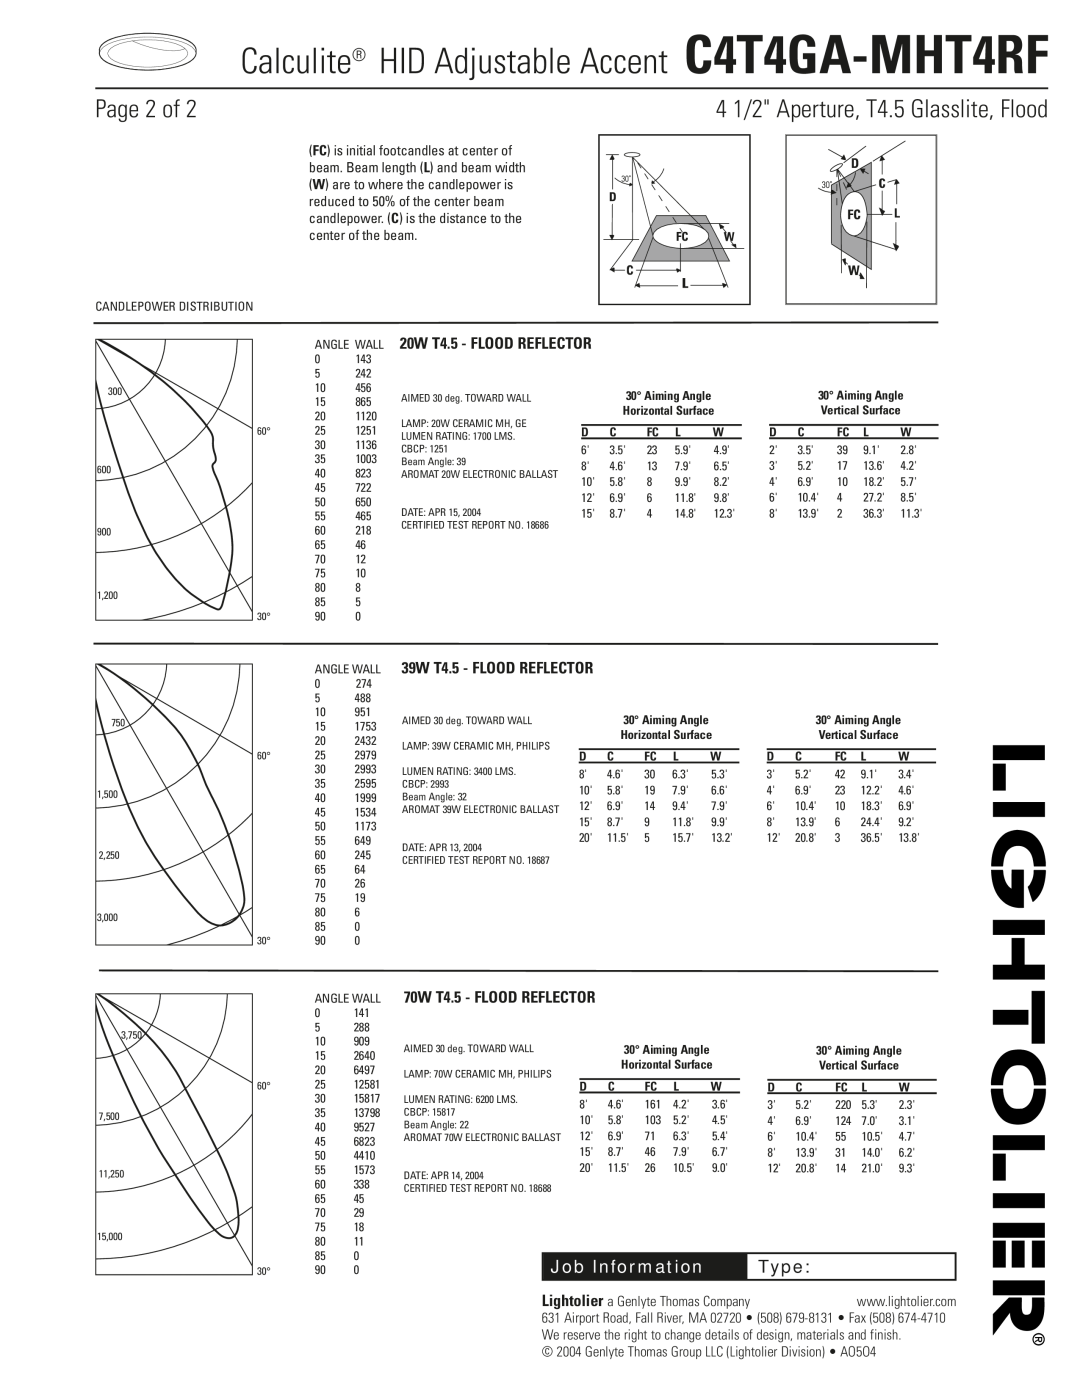 Lightolier manual Page 2 of, 4 1/2 Aperture, T4.5 Glasslite, Flood, Calculite HID Adjustable Accent C4T4GA-MHT4RF, Type 